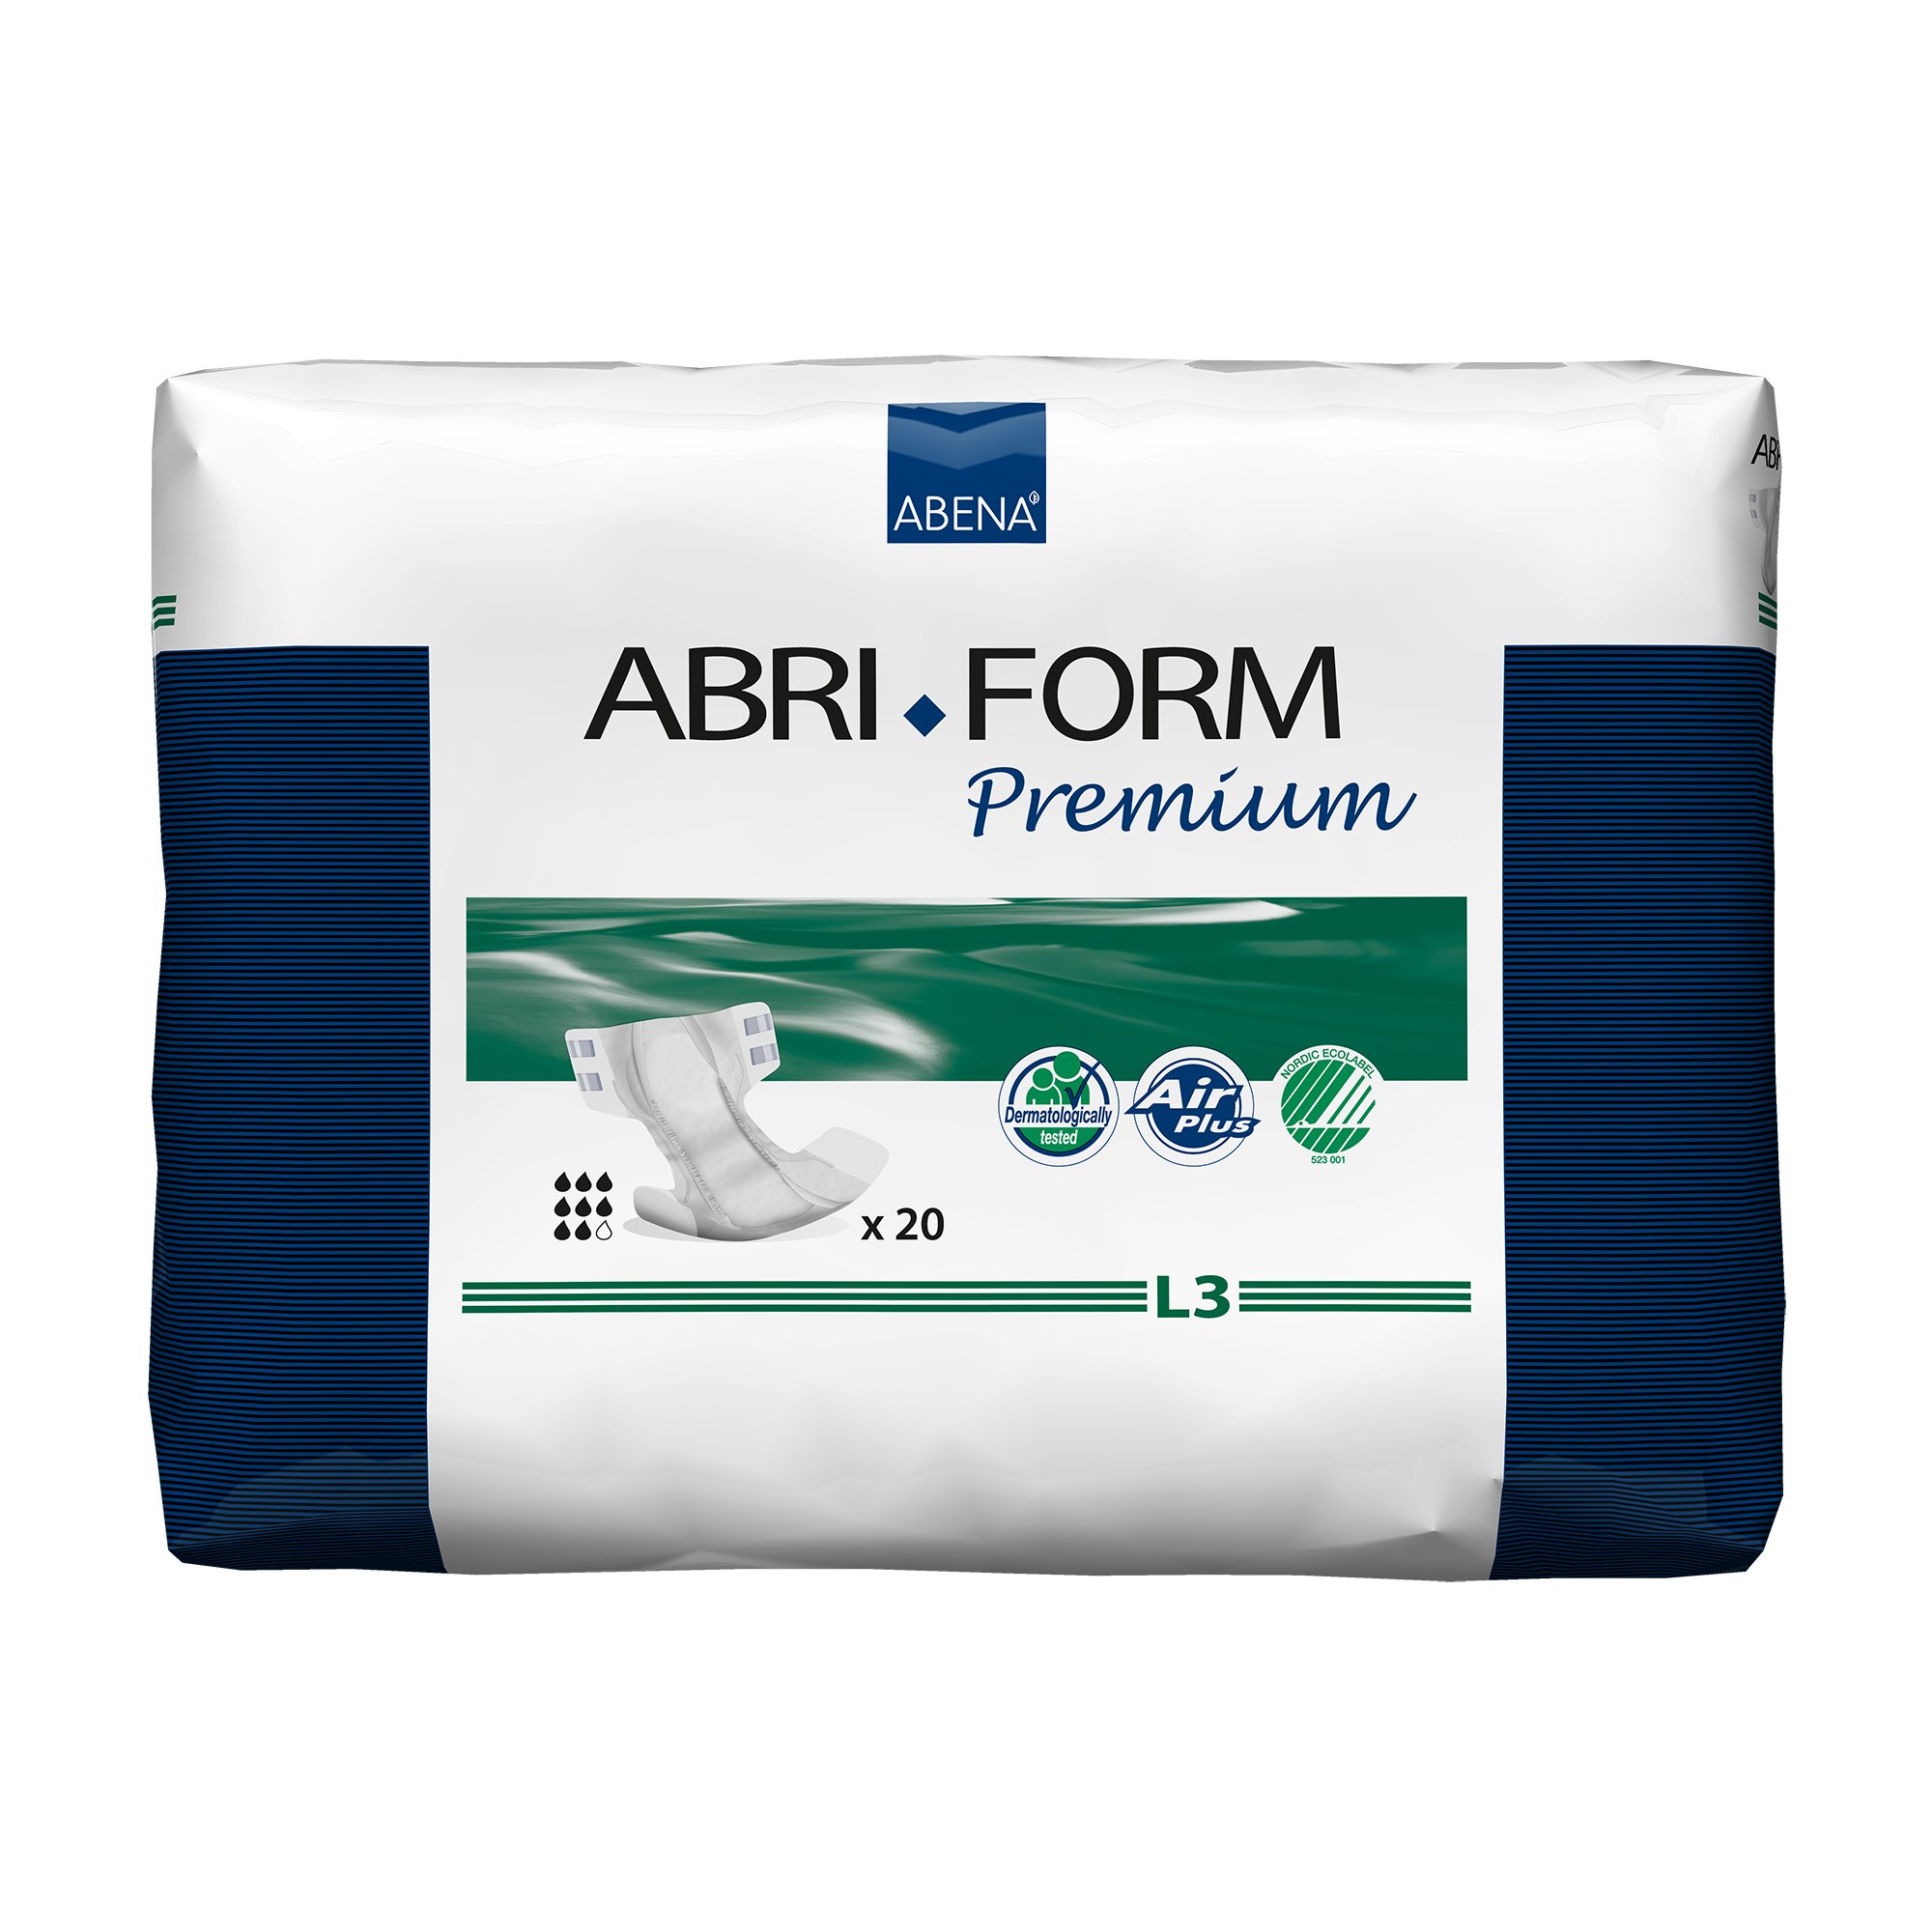 Abri-Form Premium L3 Incontinence Brief, Large